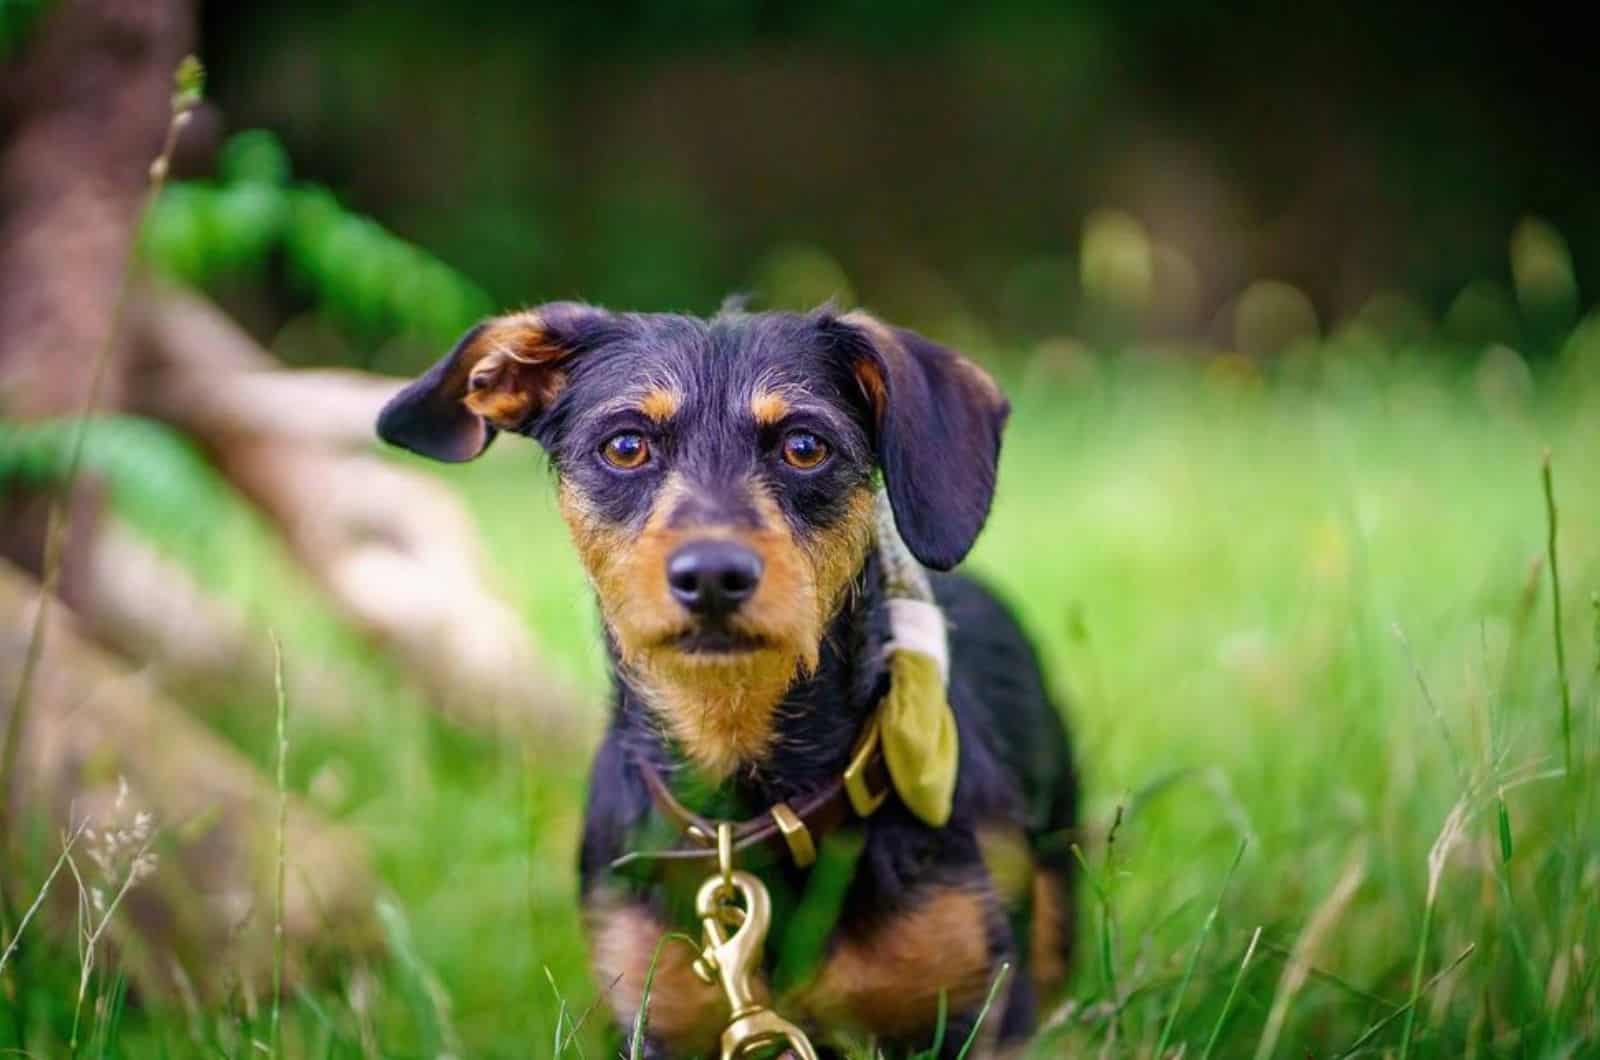 jack russell dachshund mix, known as jackshund